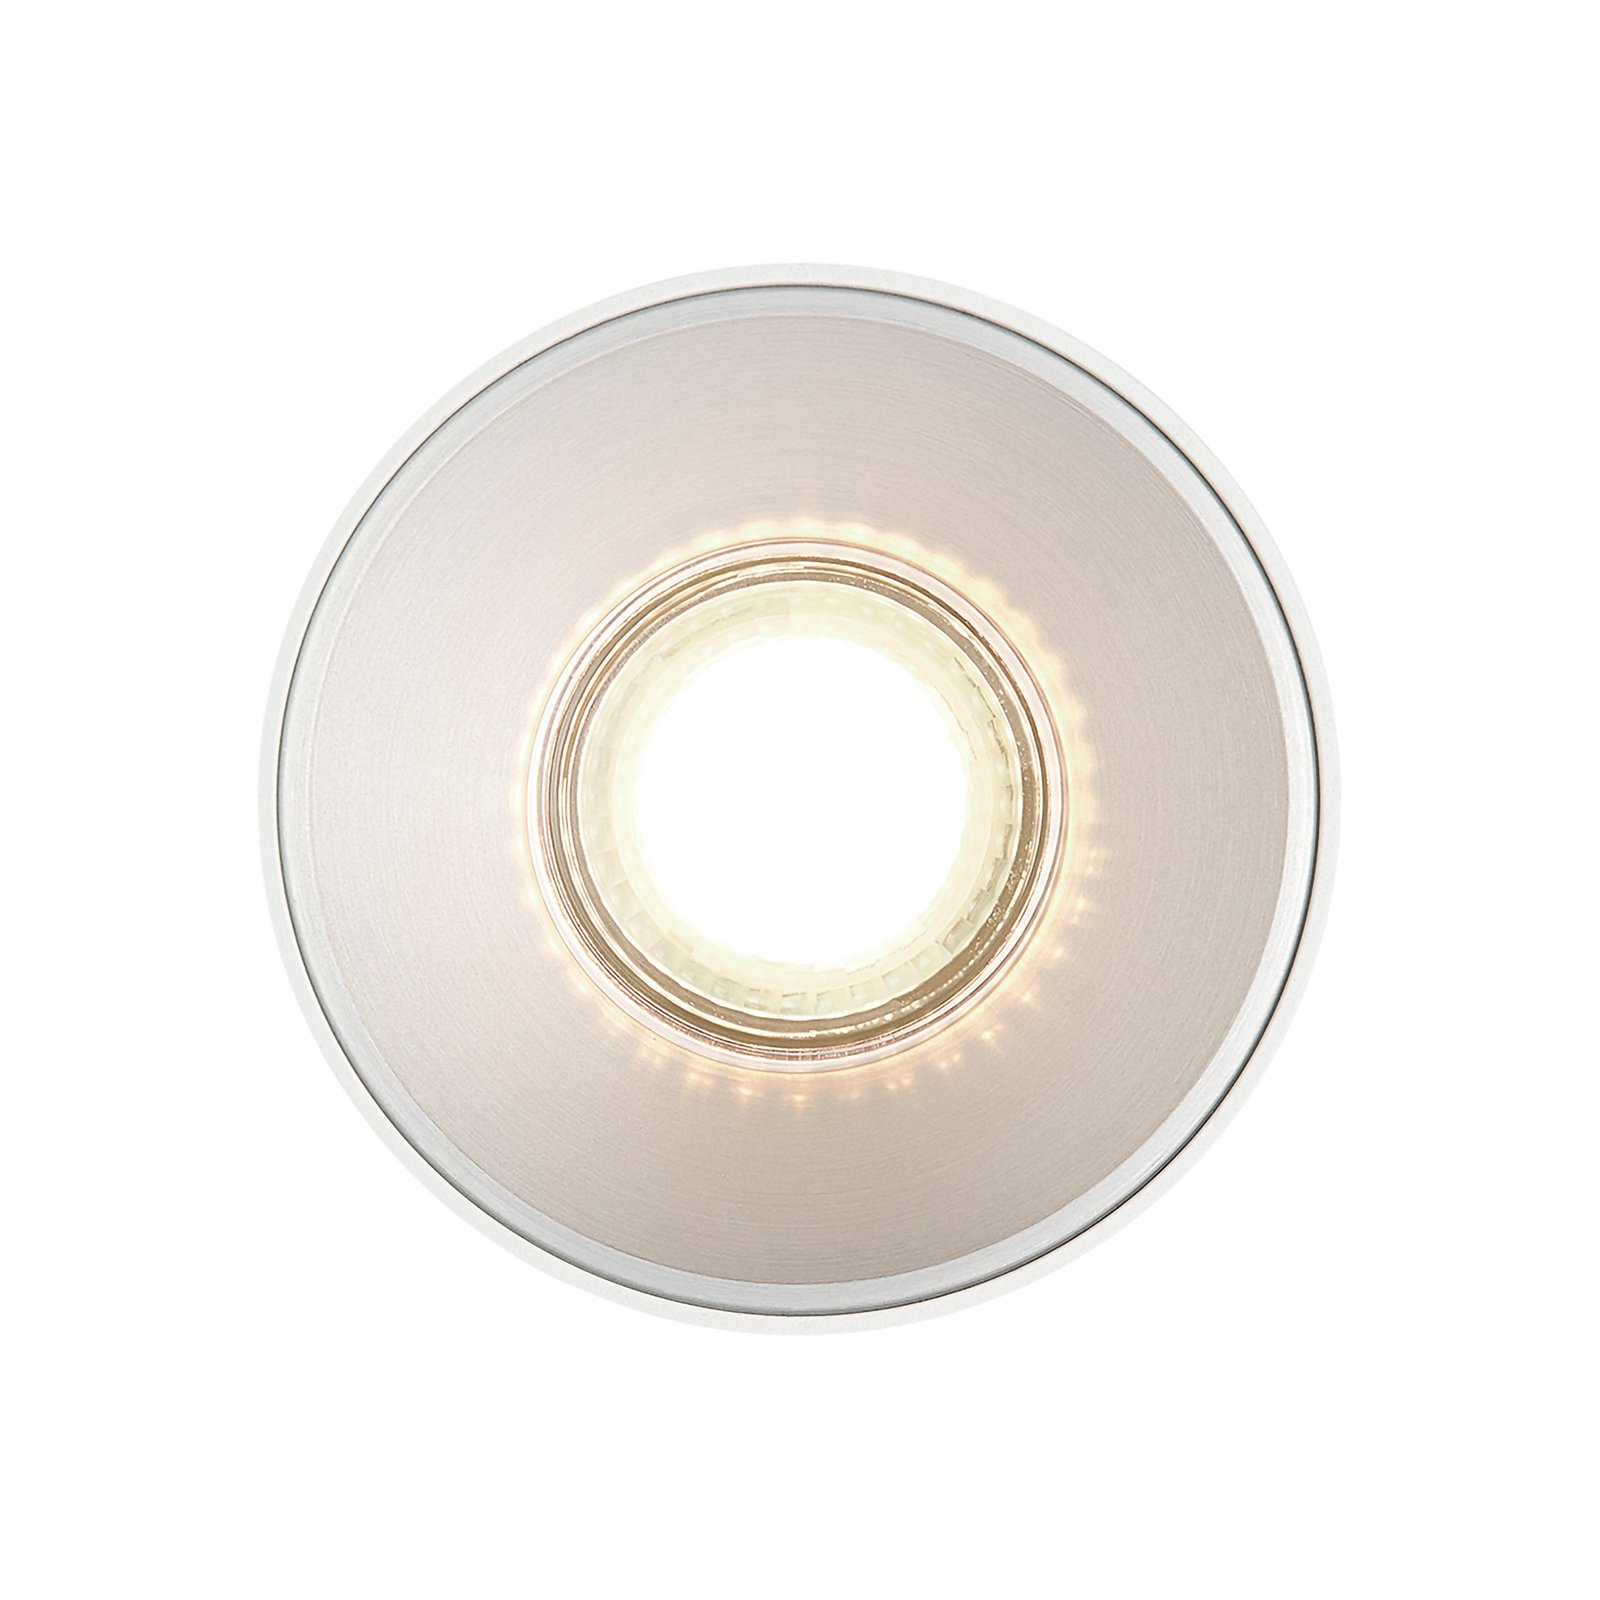 Pitcher downlight, GU10, 1-bulb, metal, white